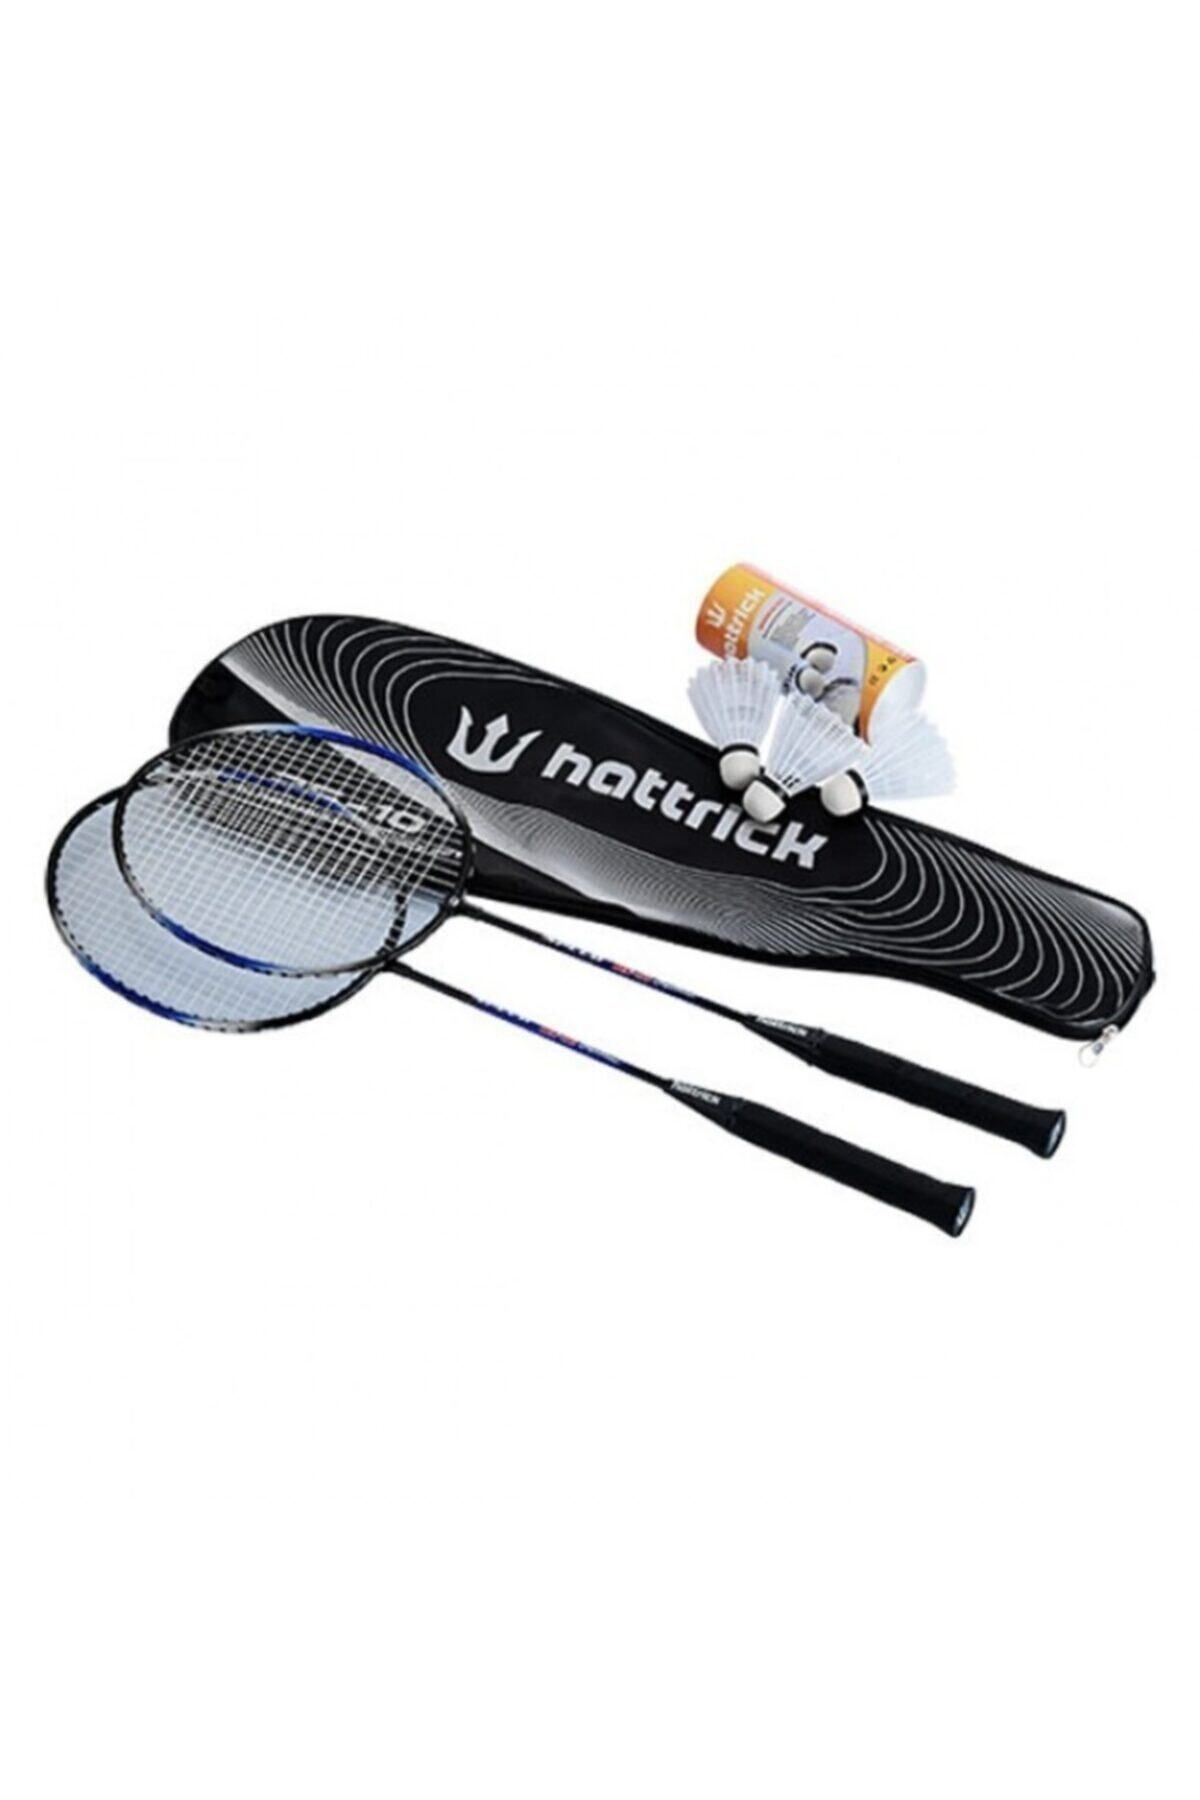 Hattrick Badminton Seti Bs-10 Pro 2 Raket 3 Top Set